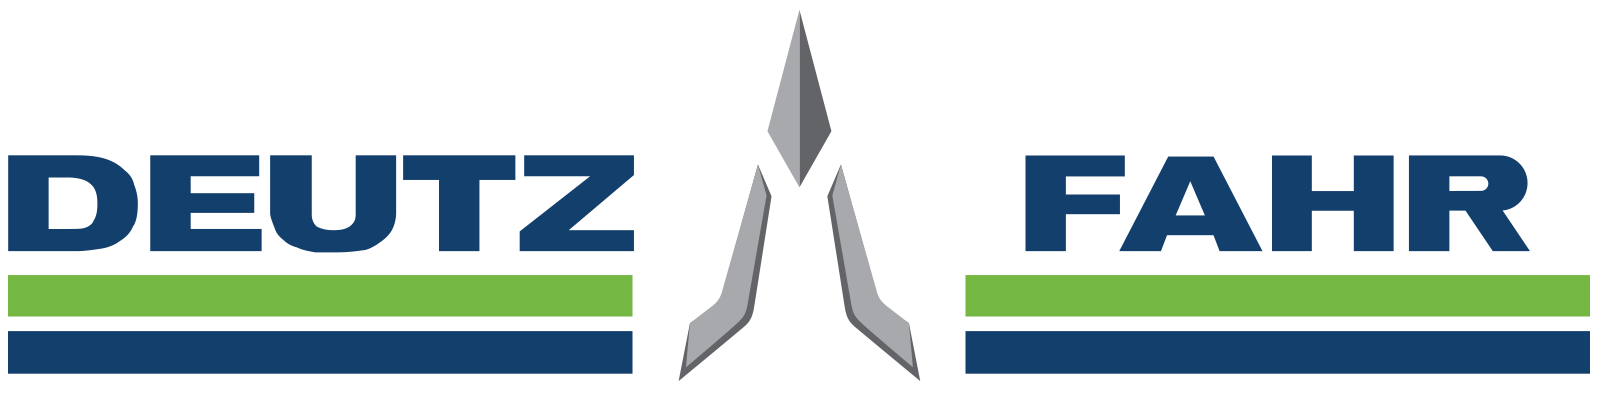 DEUTZ-FAHR logo